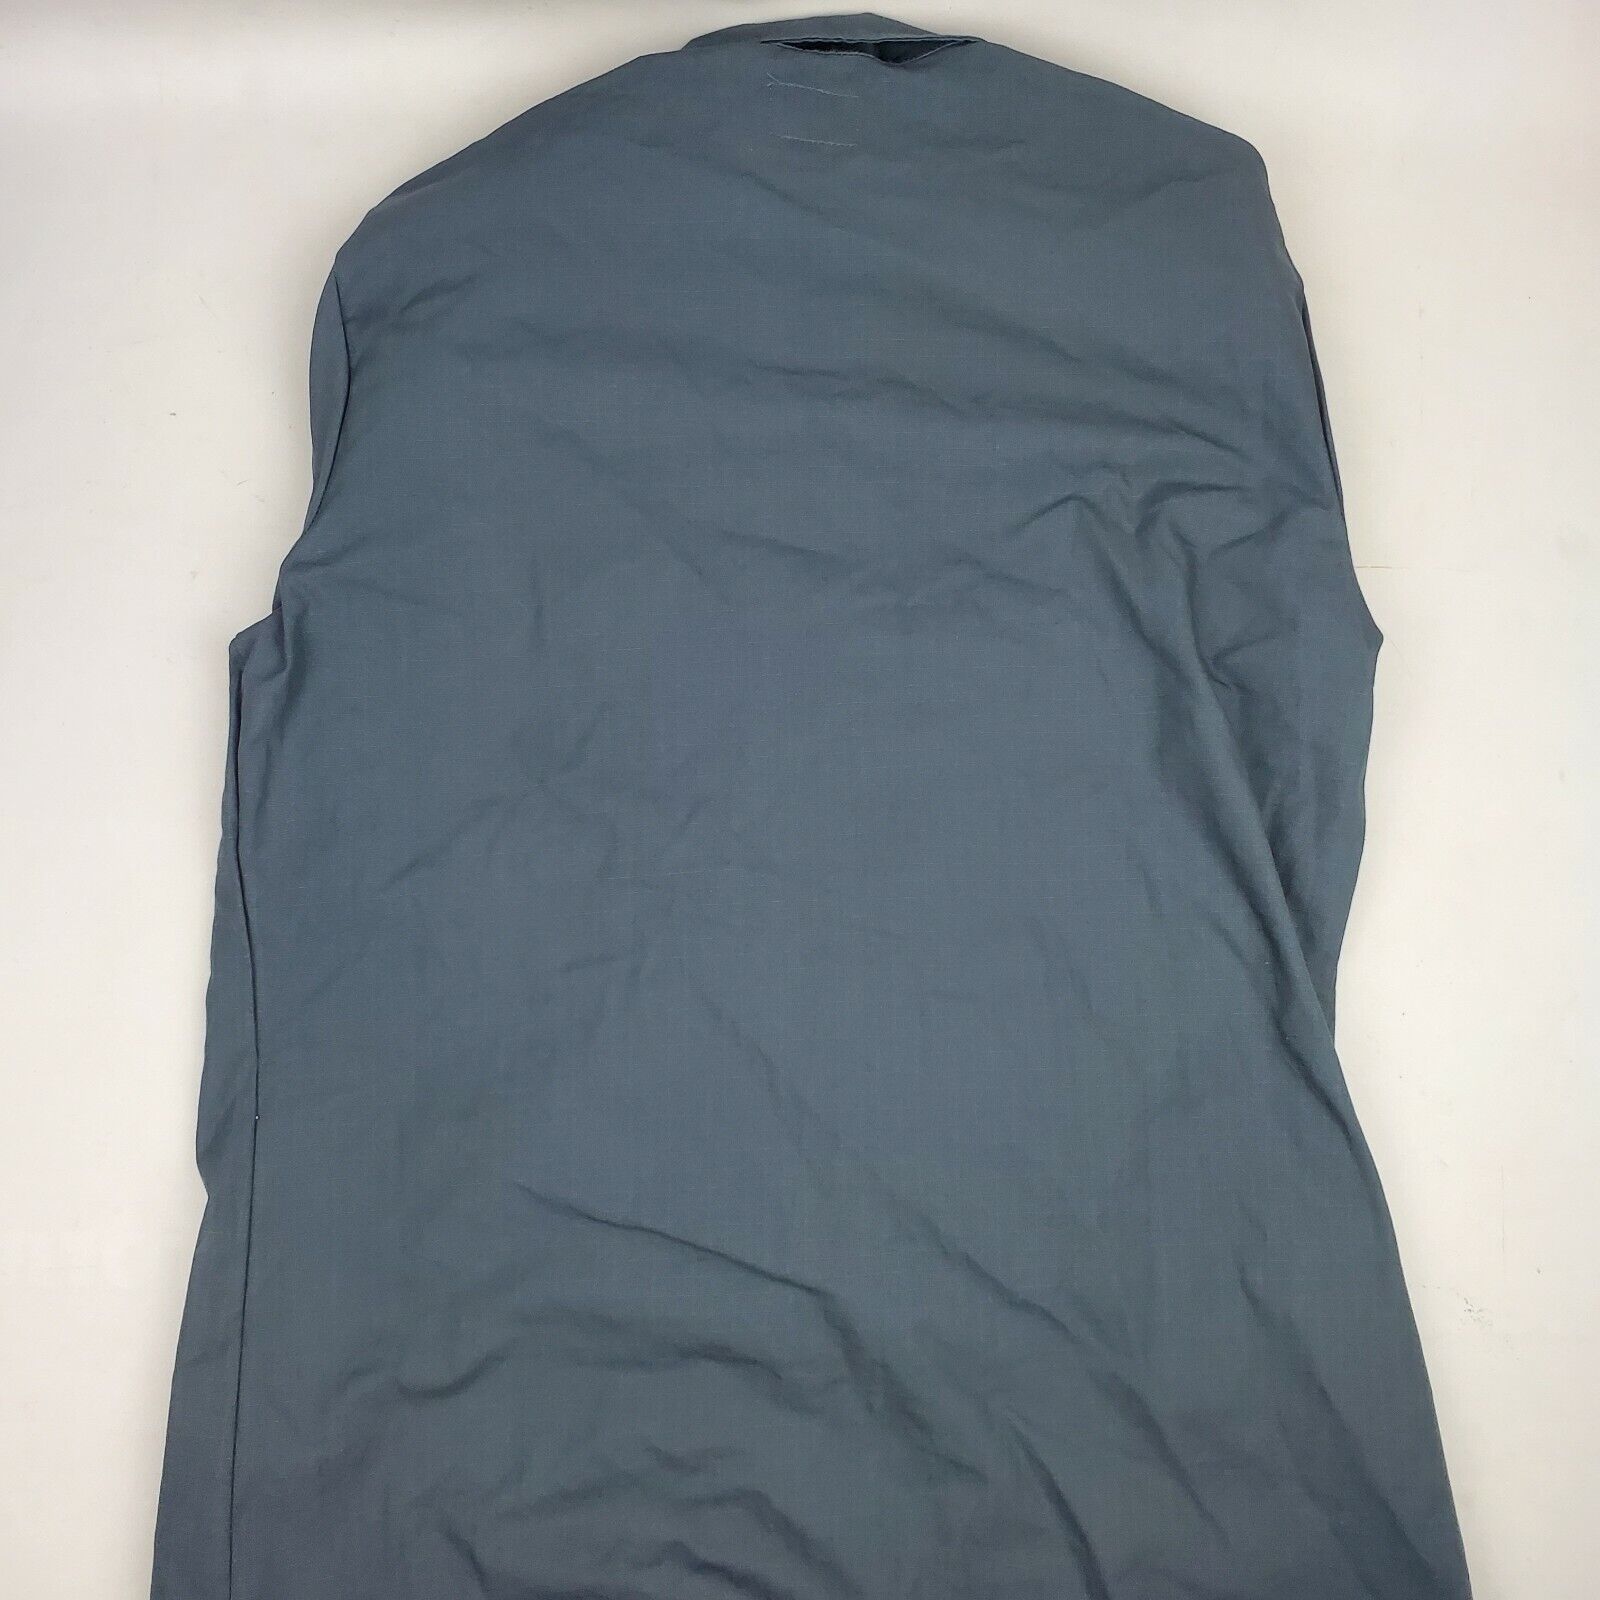 NWOT Military Tactical Shirt Grey Combat Coat Sz Medium Regular Long Sleeve USA Без бренда - фотография #5